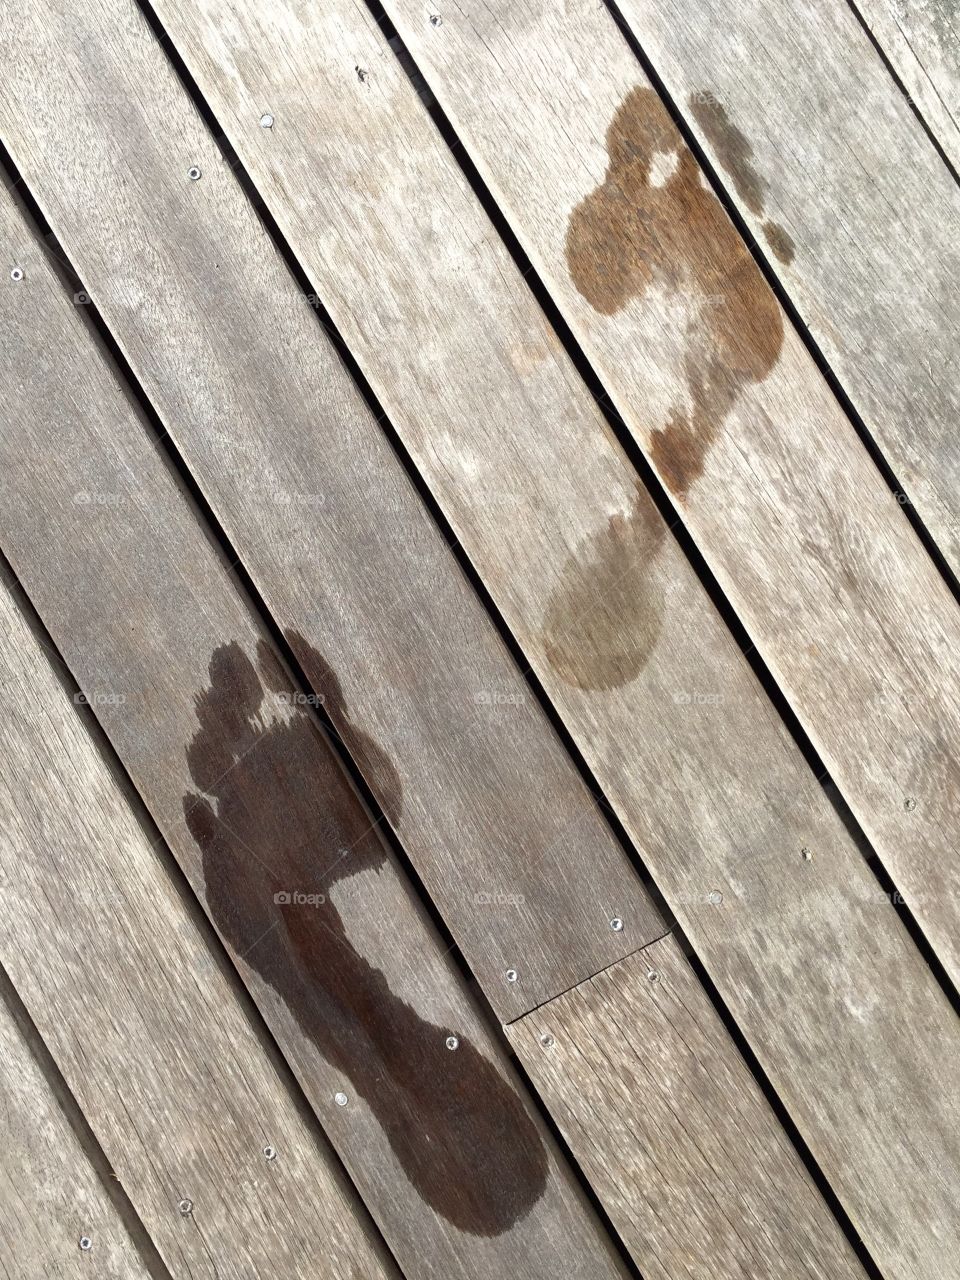 Wet footprints on wood dock